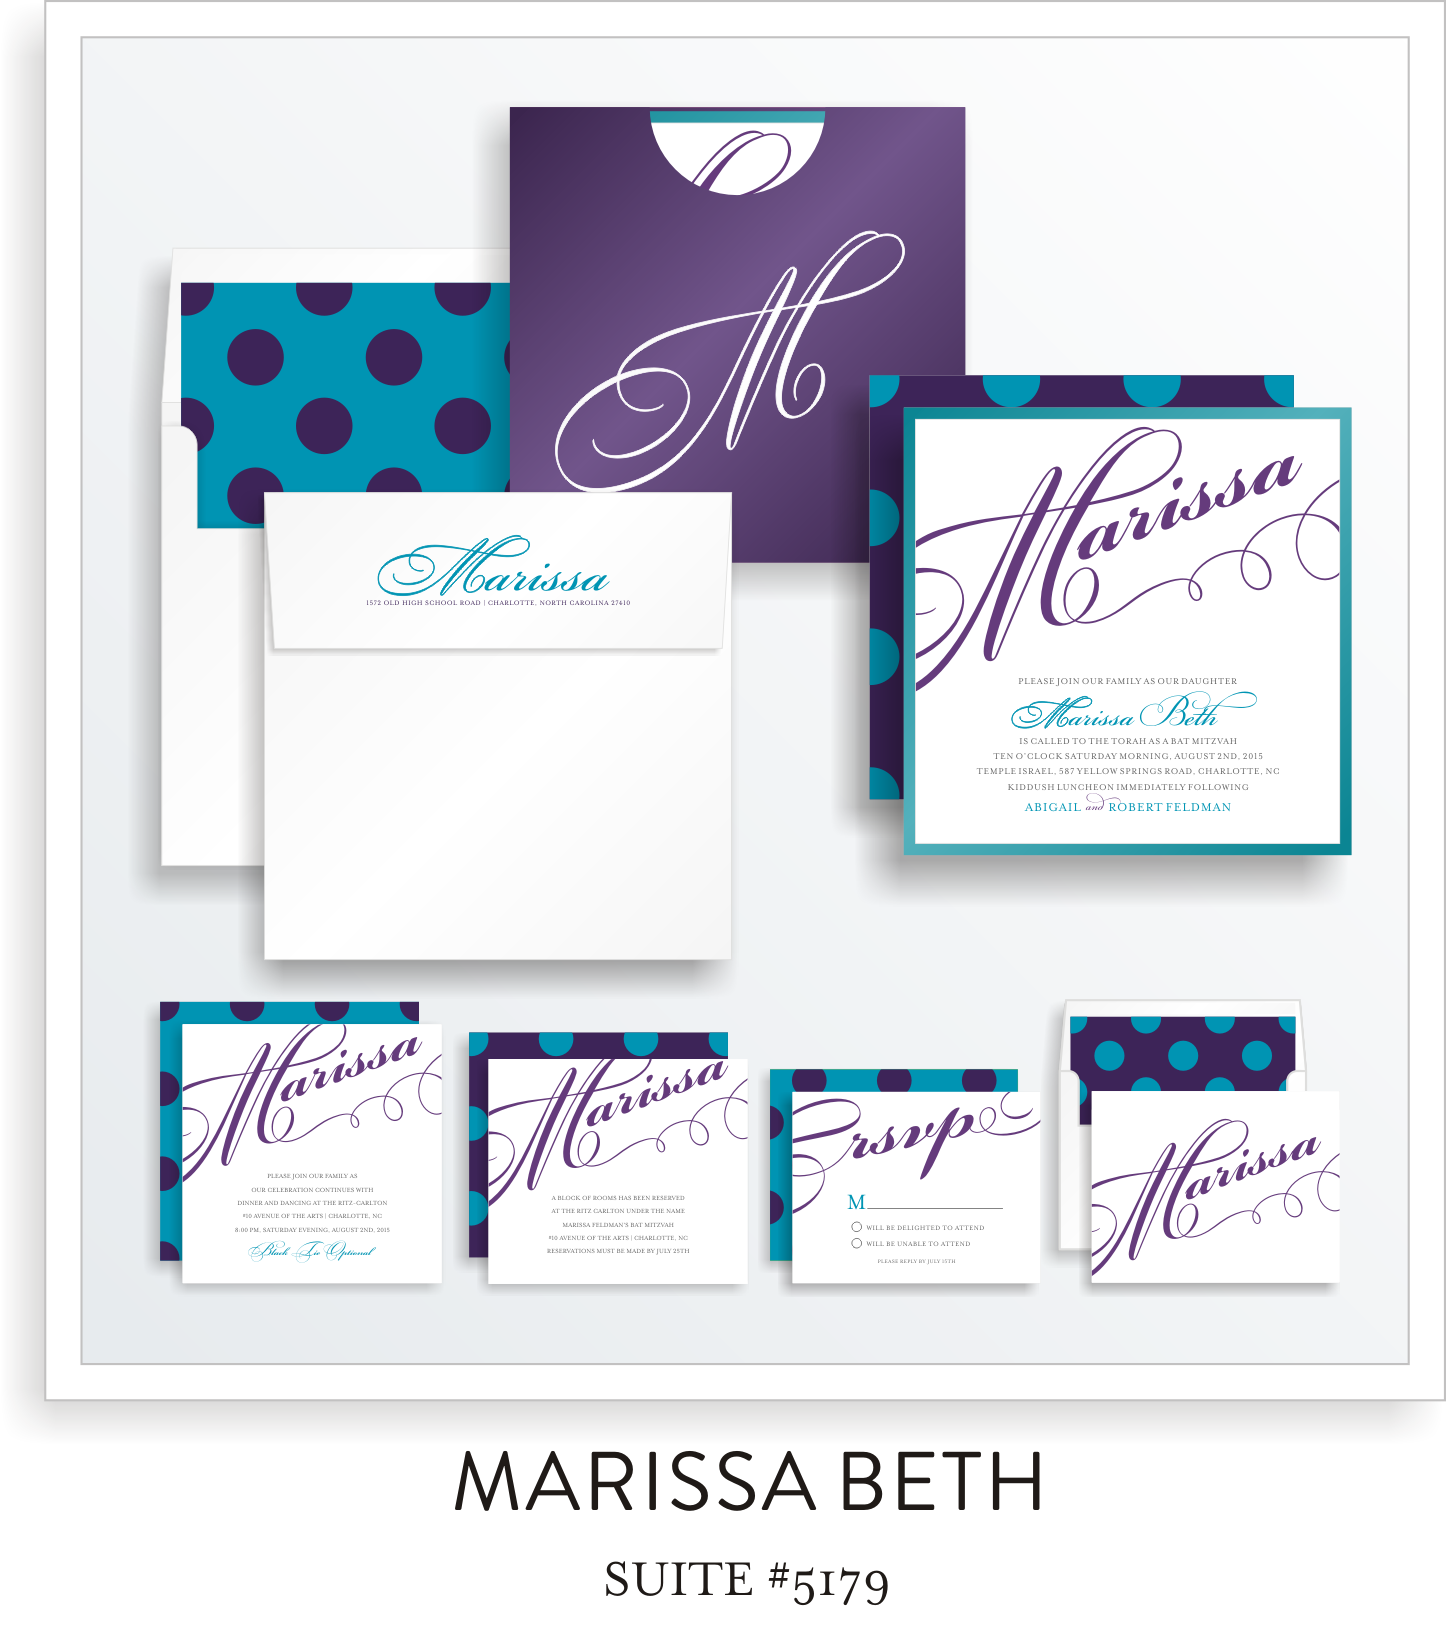 Copy of Copy of Bat Mitzvah Invitation Suite 5179 - Marissa Beth